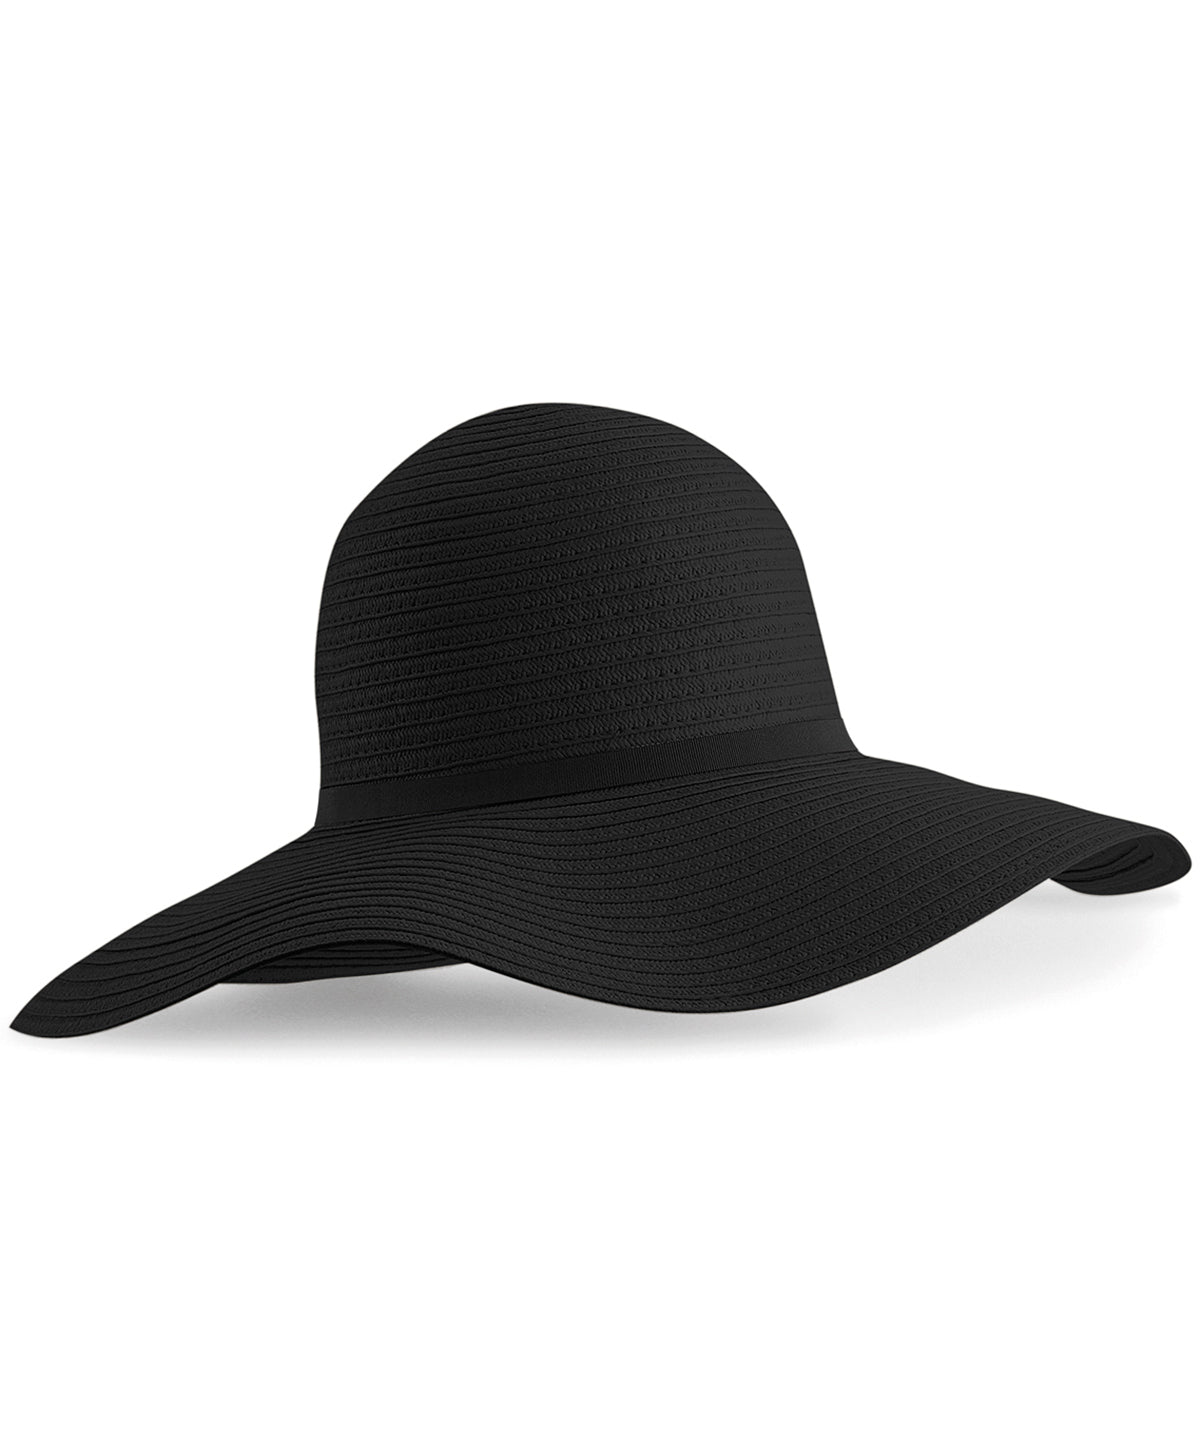 Personalised Hats - Black Beechfield Marbella wide-brimmed sun hat